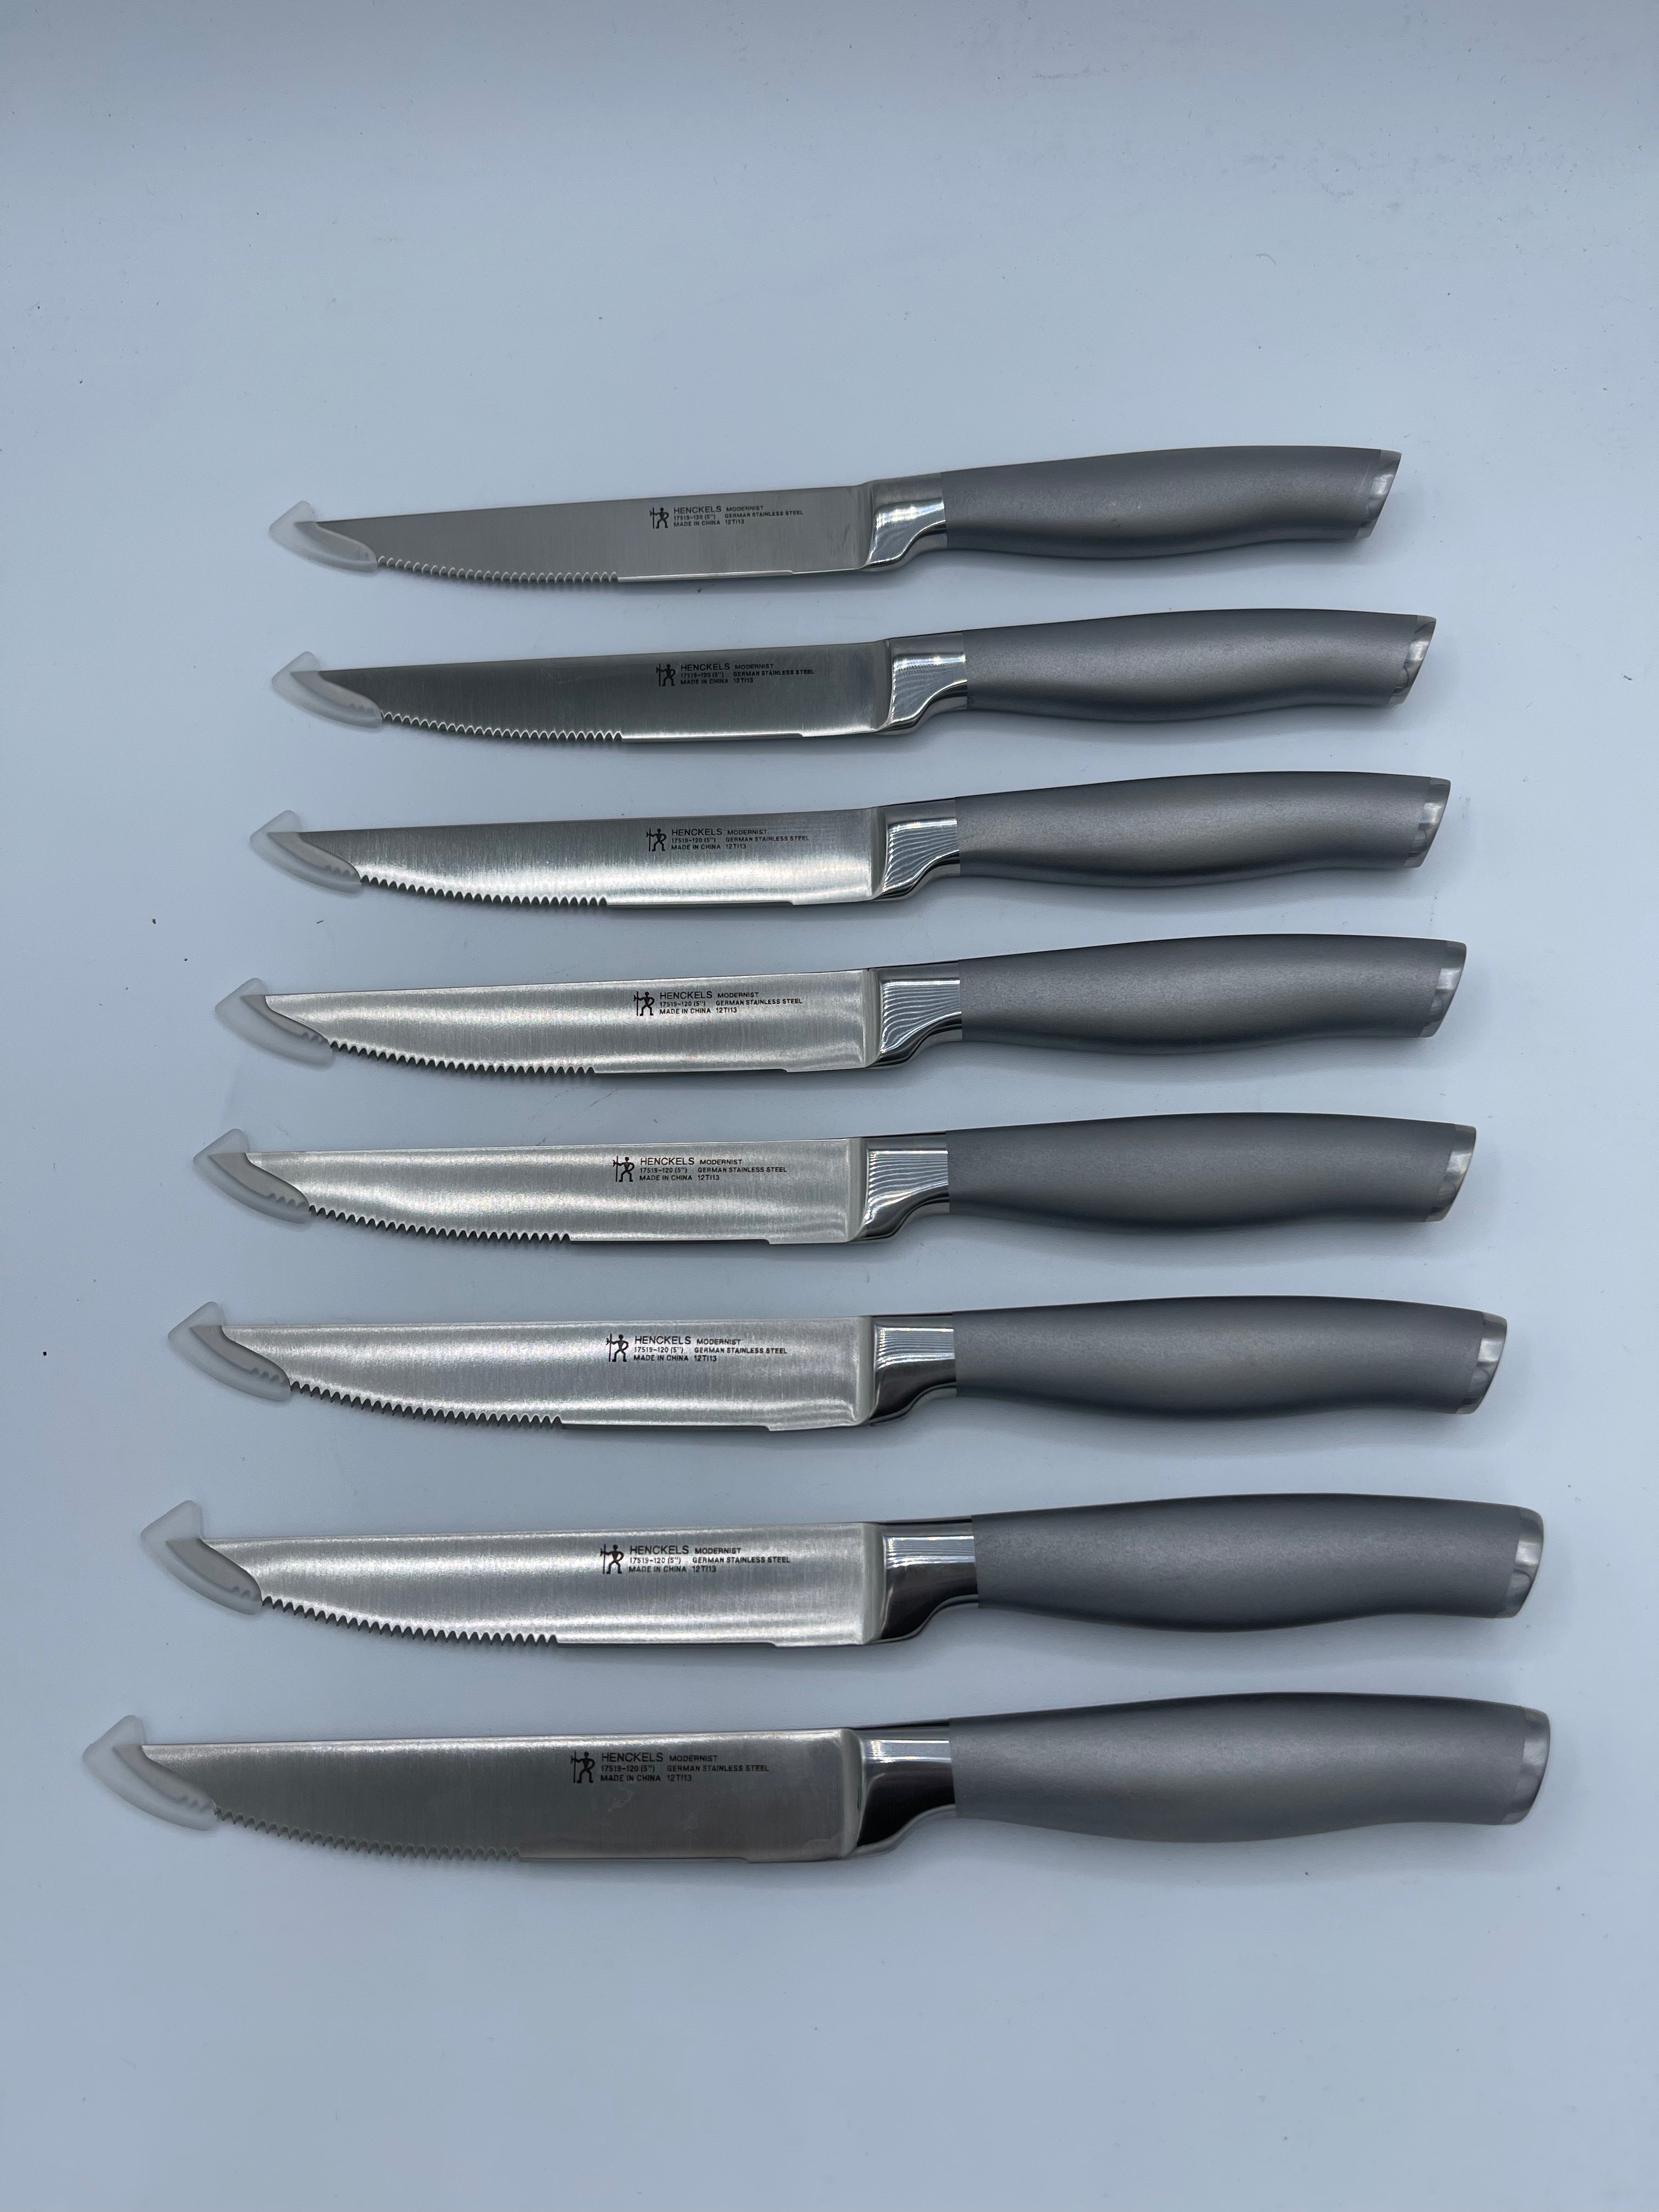 HENCKELS - MODERNIST 20 PC SELF-SHARPENING KNIFE BLOCK SET - 17503-020 *missing knife block*